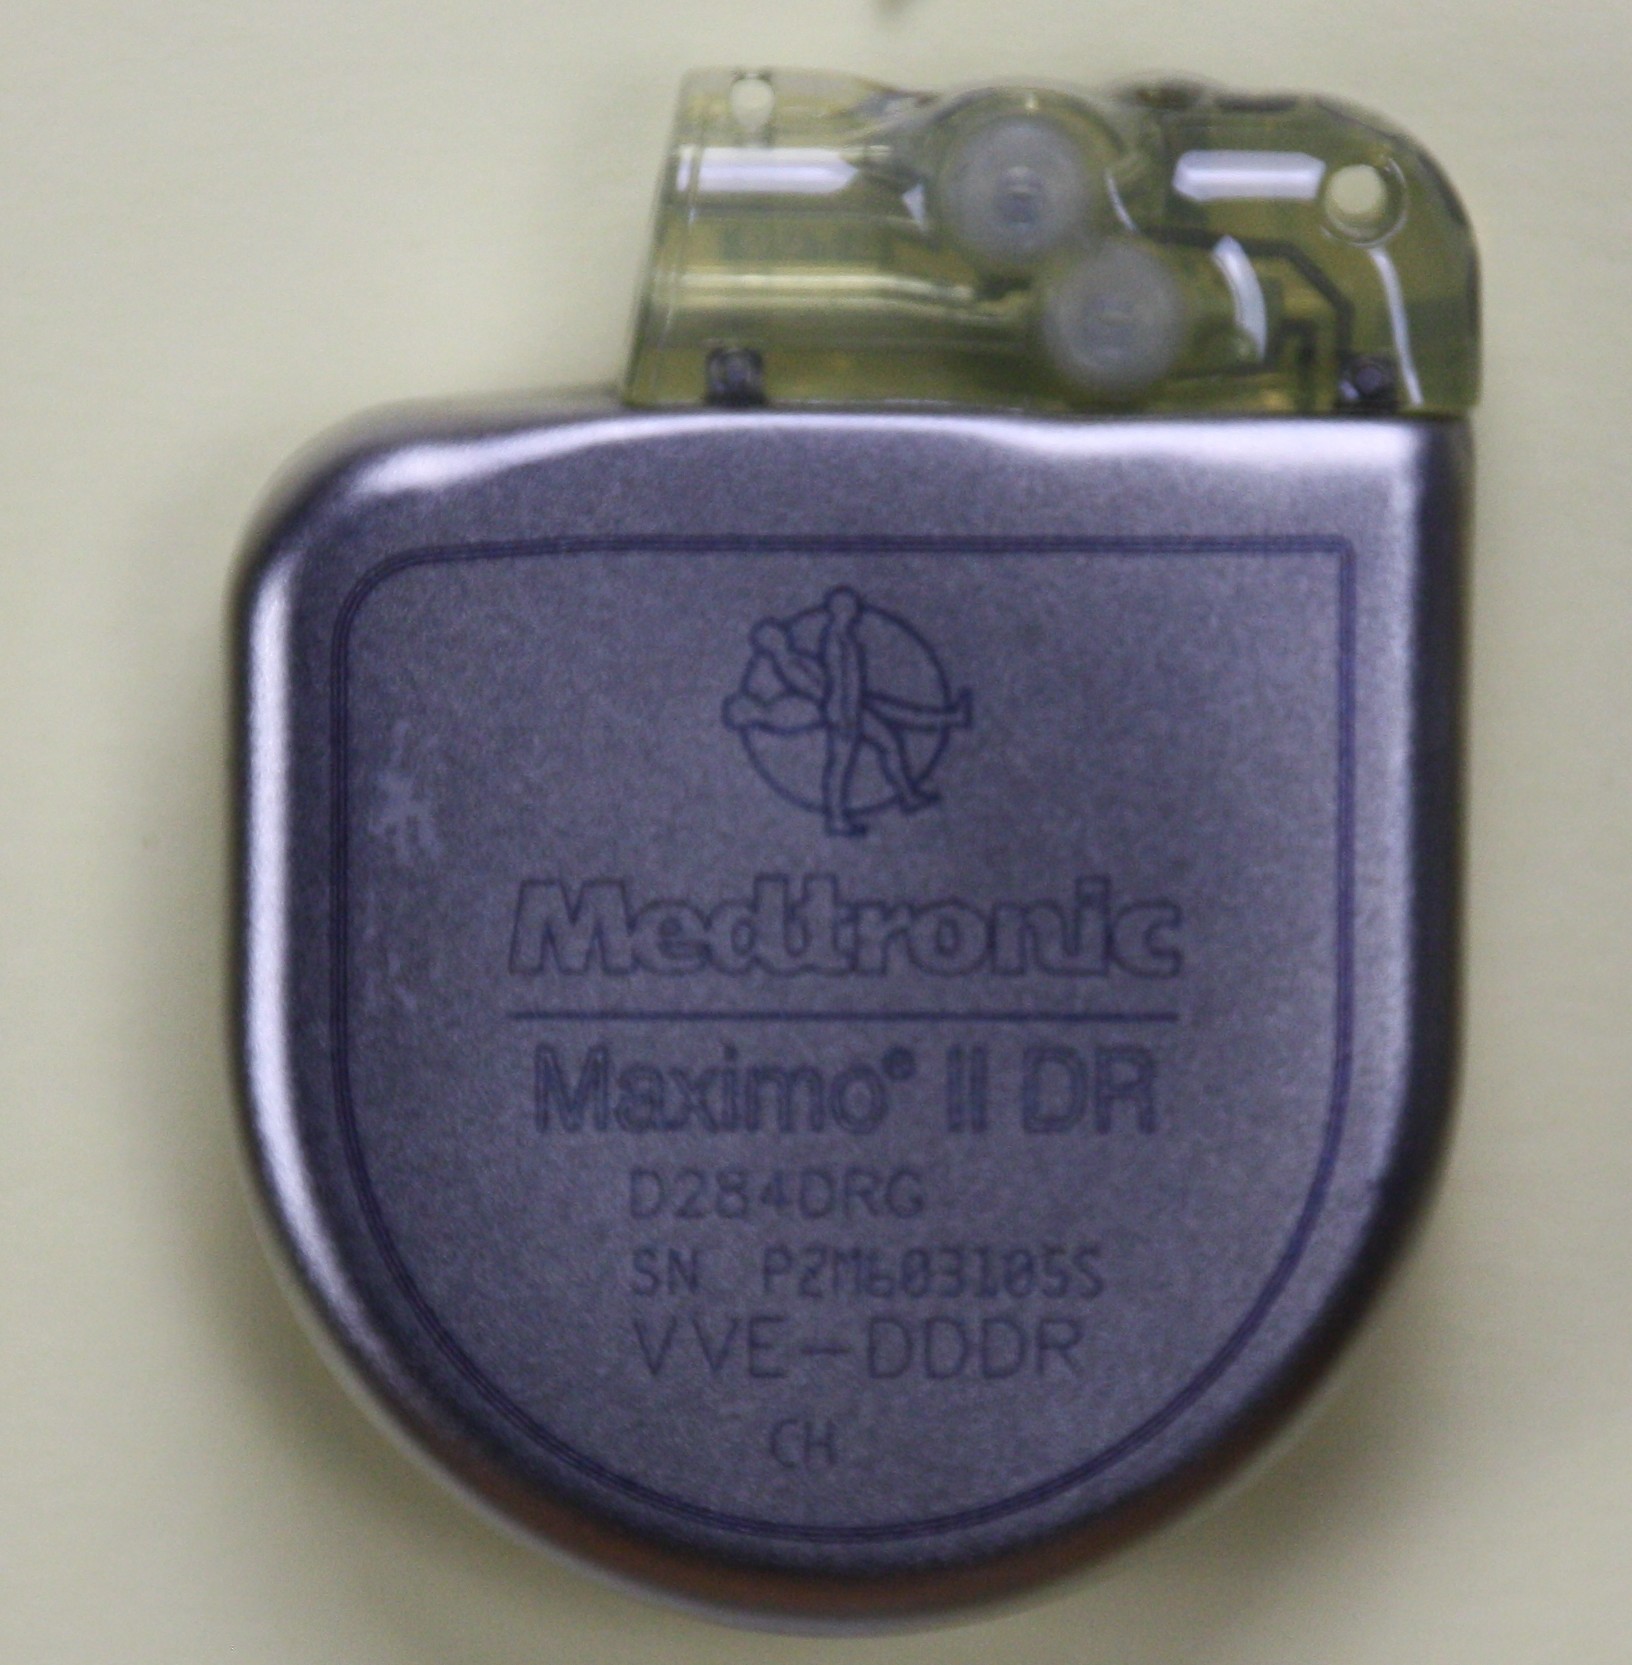 Herzschrittmacher-Defibrillator-Implantat Medtronic Maximo II DR (Krankenhausmuseum Bielefeld e.V. CC BY-NC-SA)